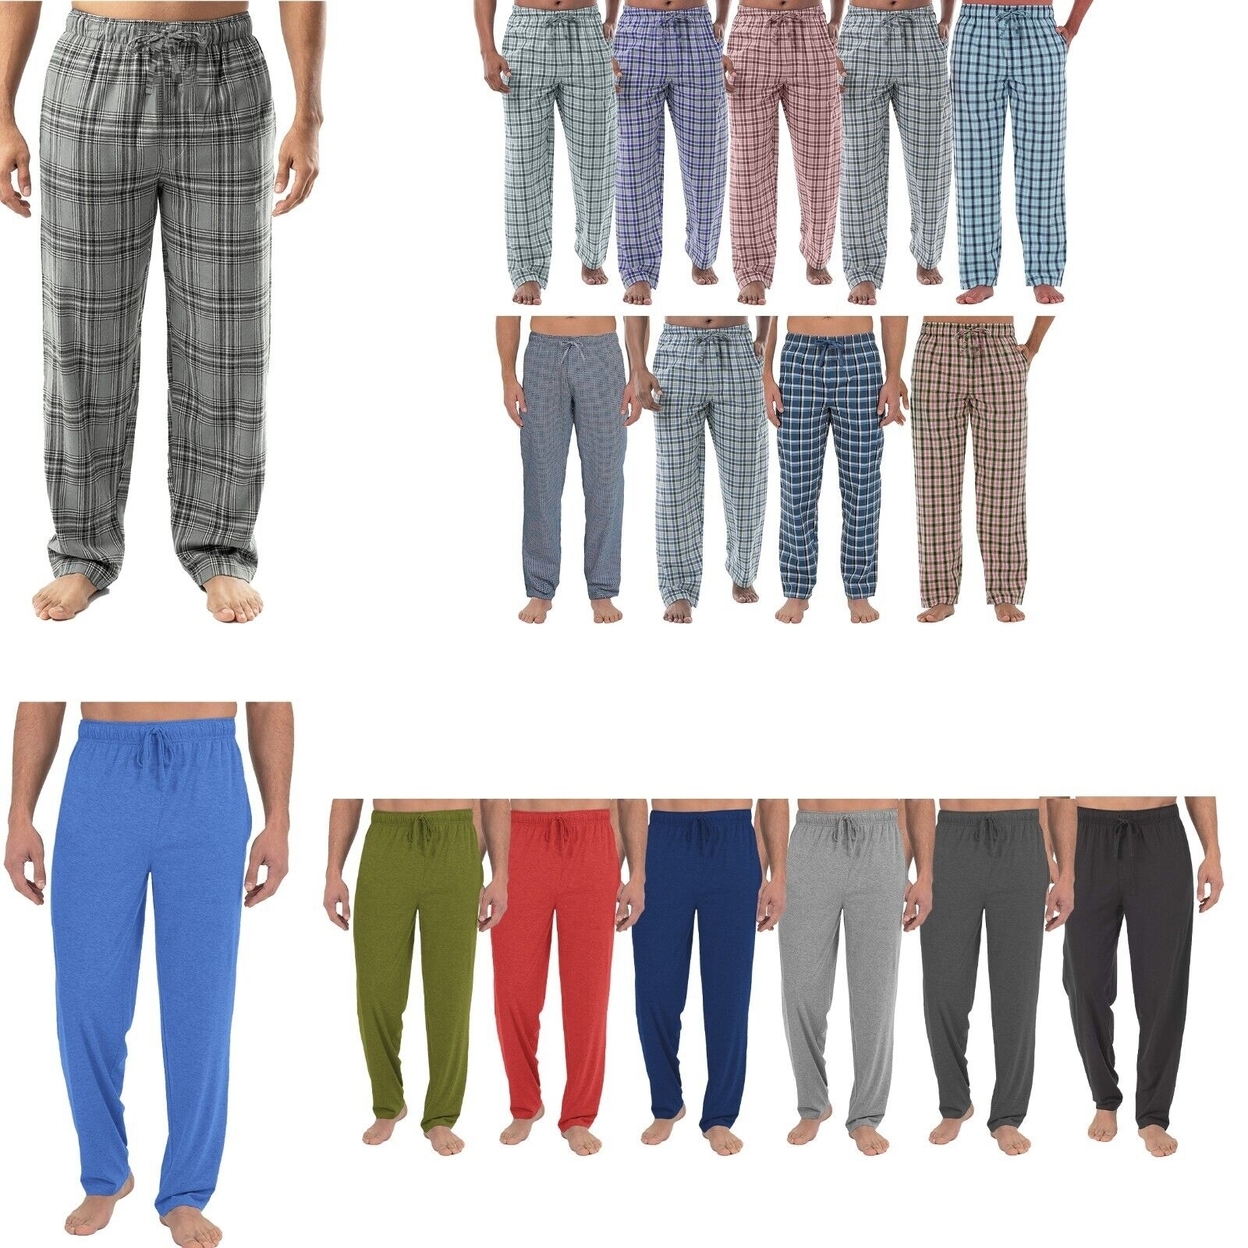 Men's Ultra-Soft Solid & Plaid Cotton Jersey Knit Comfy Sleep Lounge Pajama Pants - Plaid, Medium